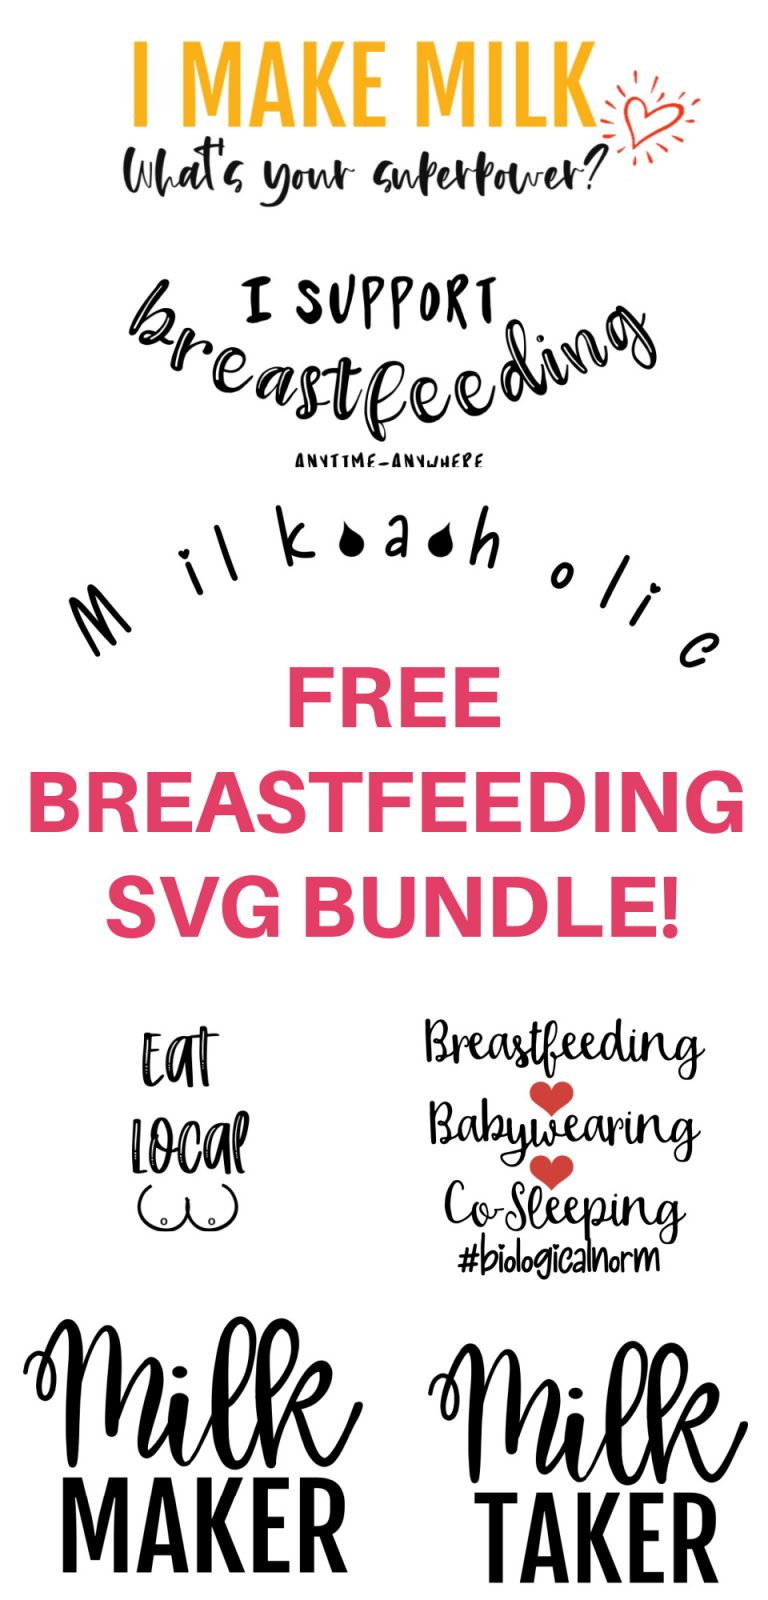 FREE Breastfeeding SVG File Bundle – 7 Files to Celebrate Breastfeeding (JPG Included)